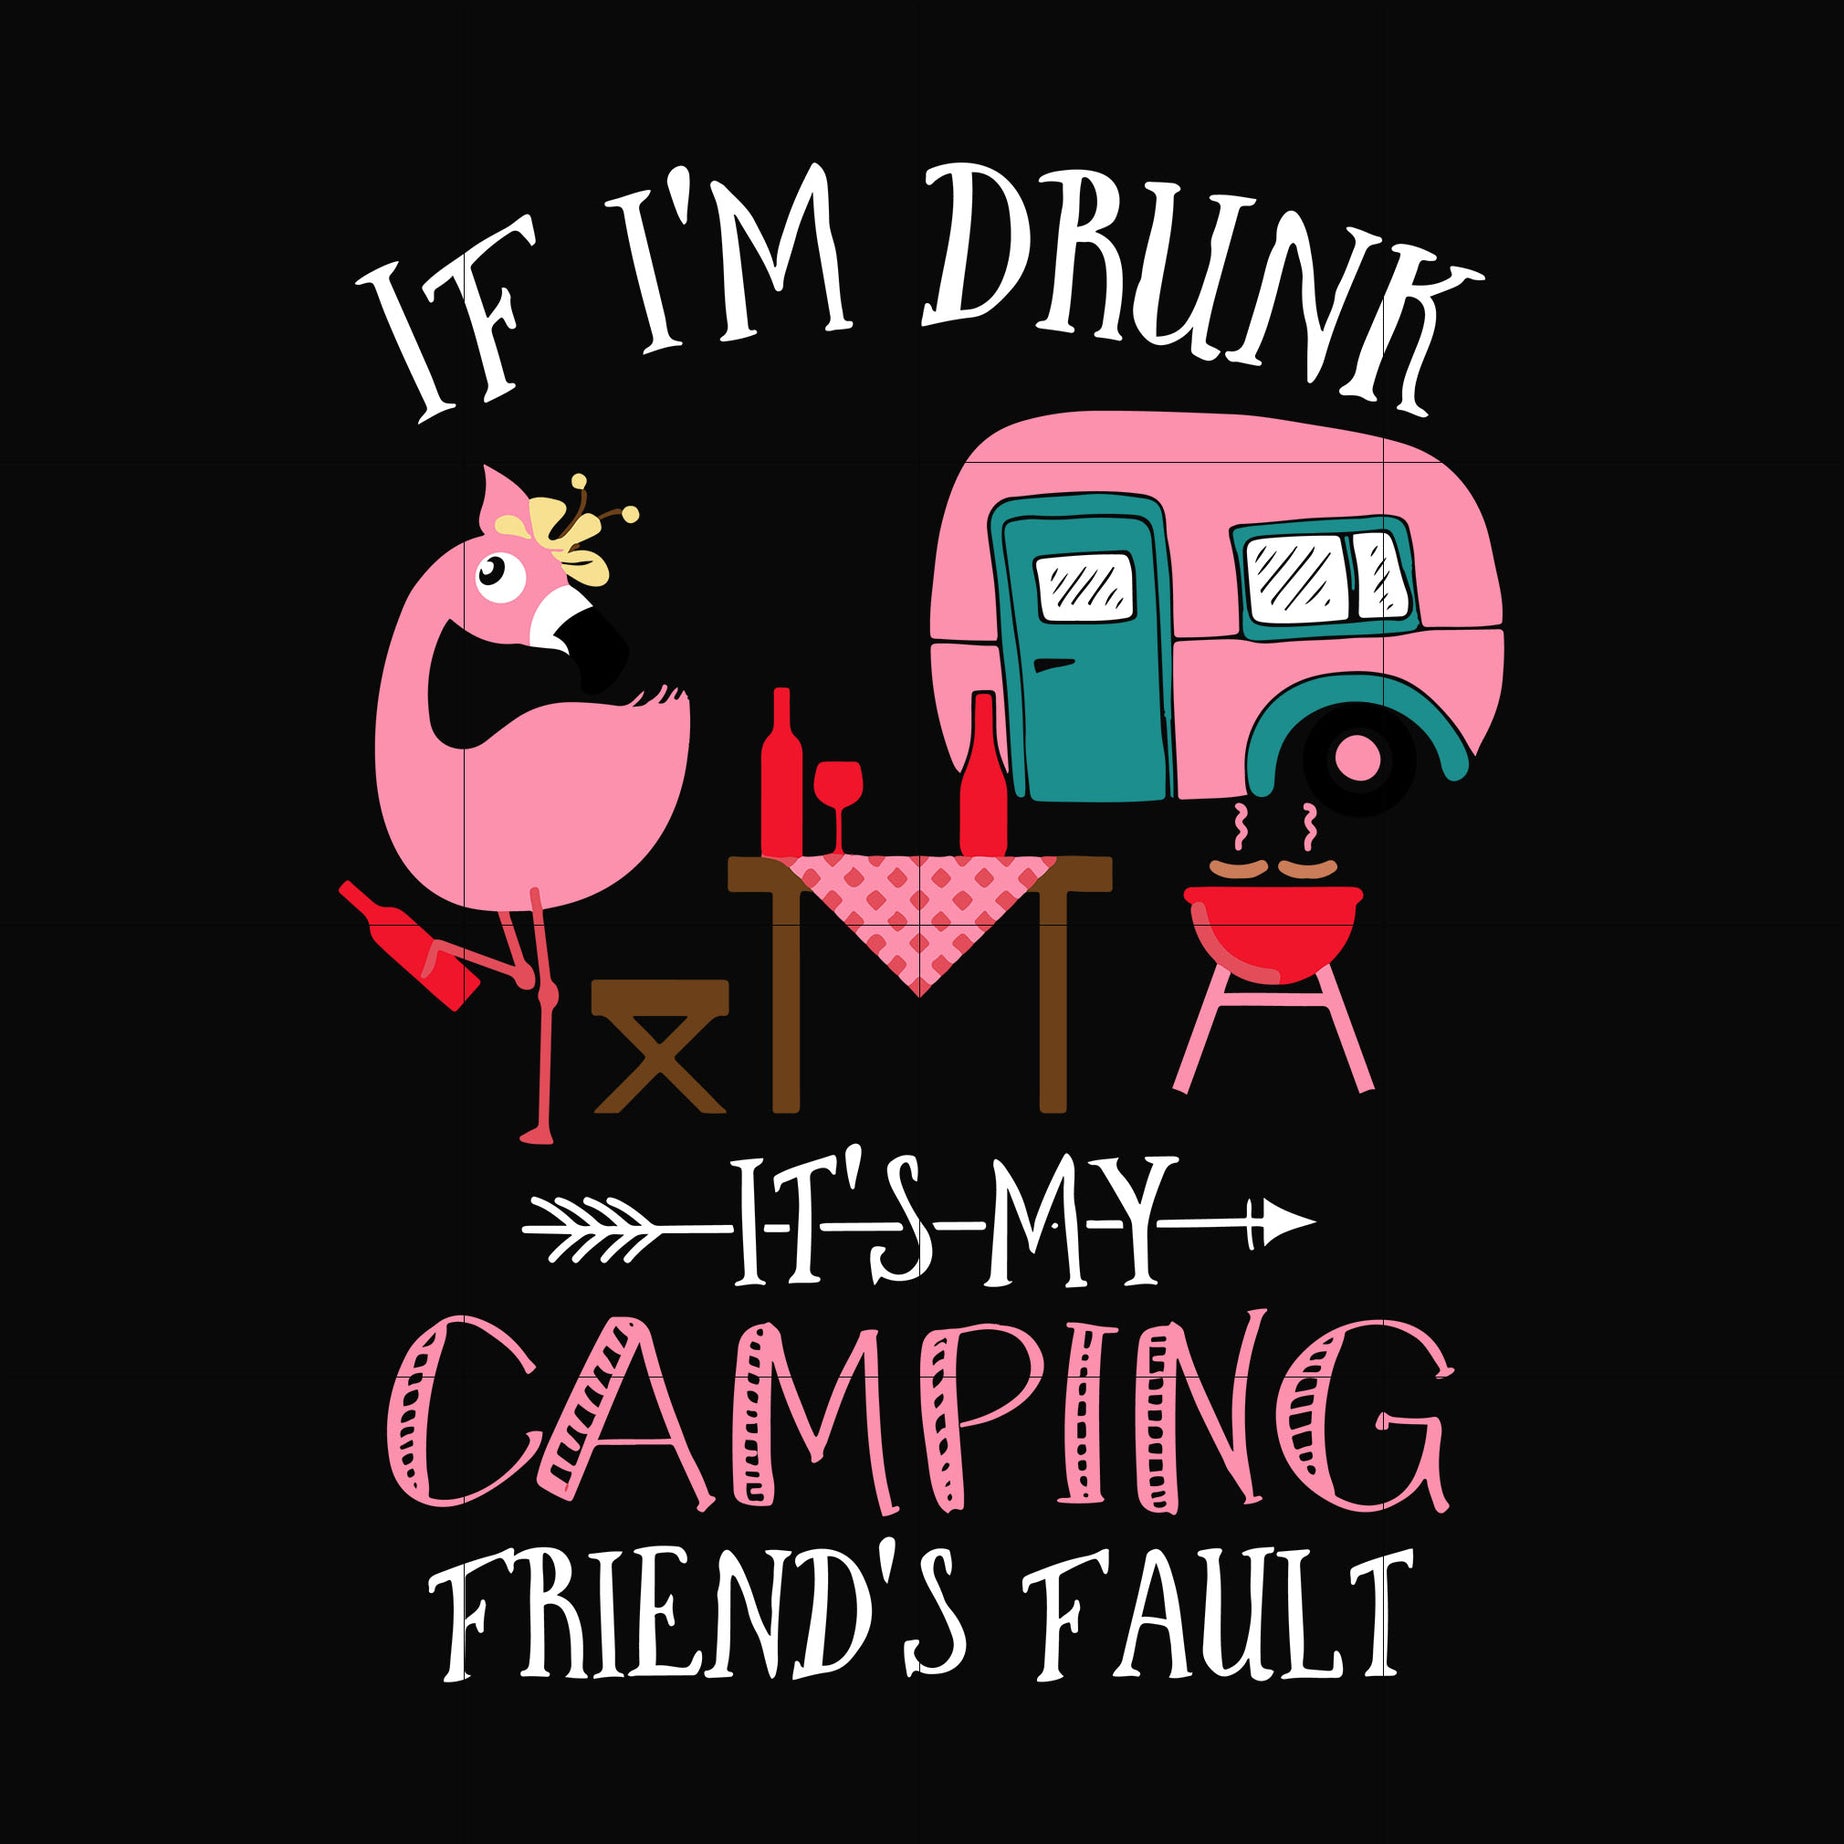 I'f i'm drunk it's my camping friend's fault svg, png, dxf, eps digital file CMP0103